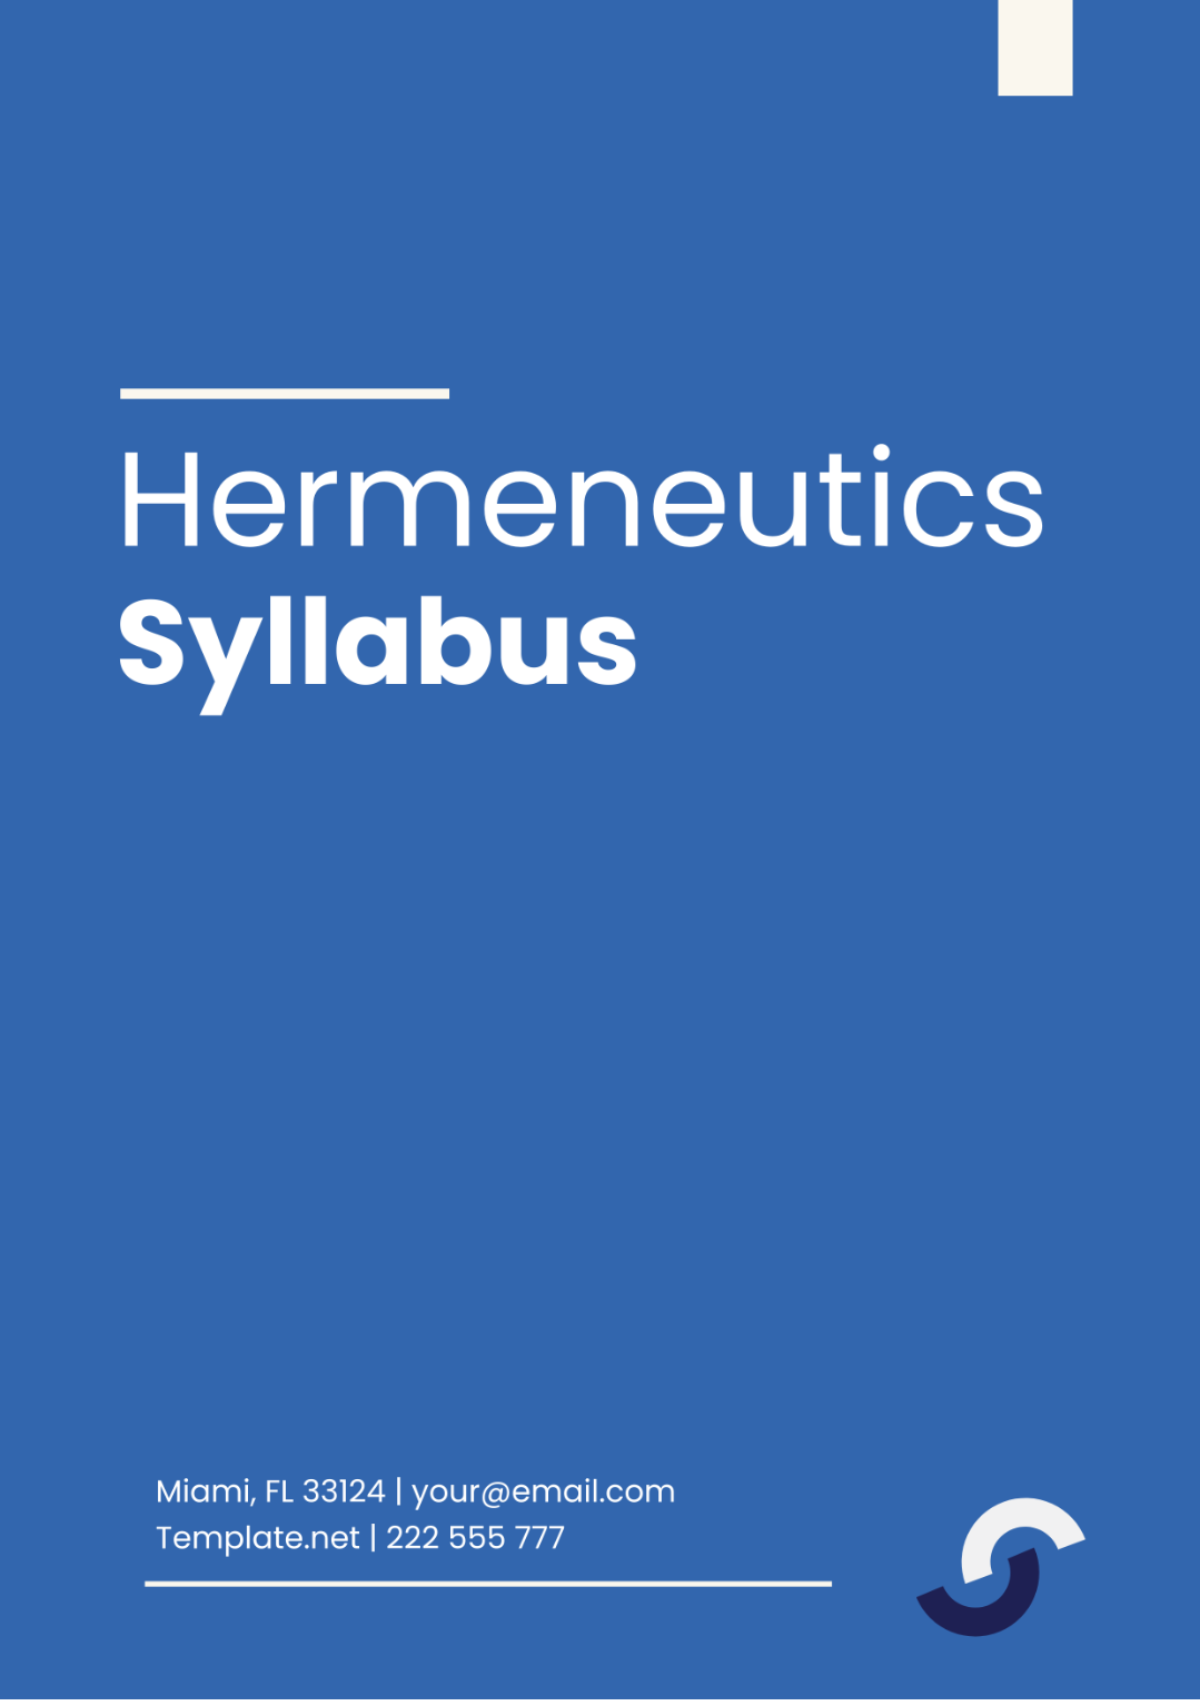 Hermeneutics Syllabus Template